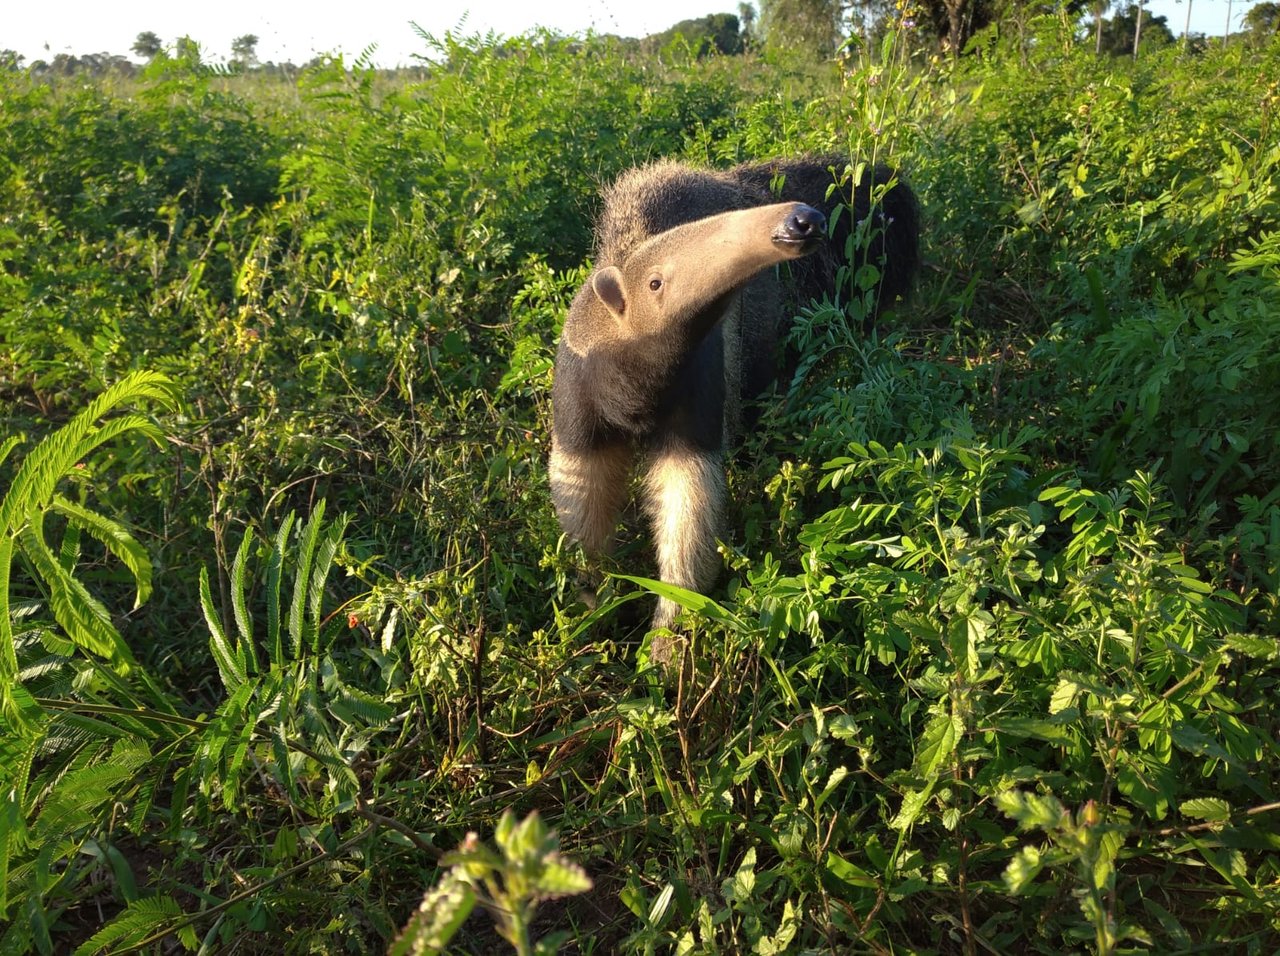 Tamara baby giant anteater